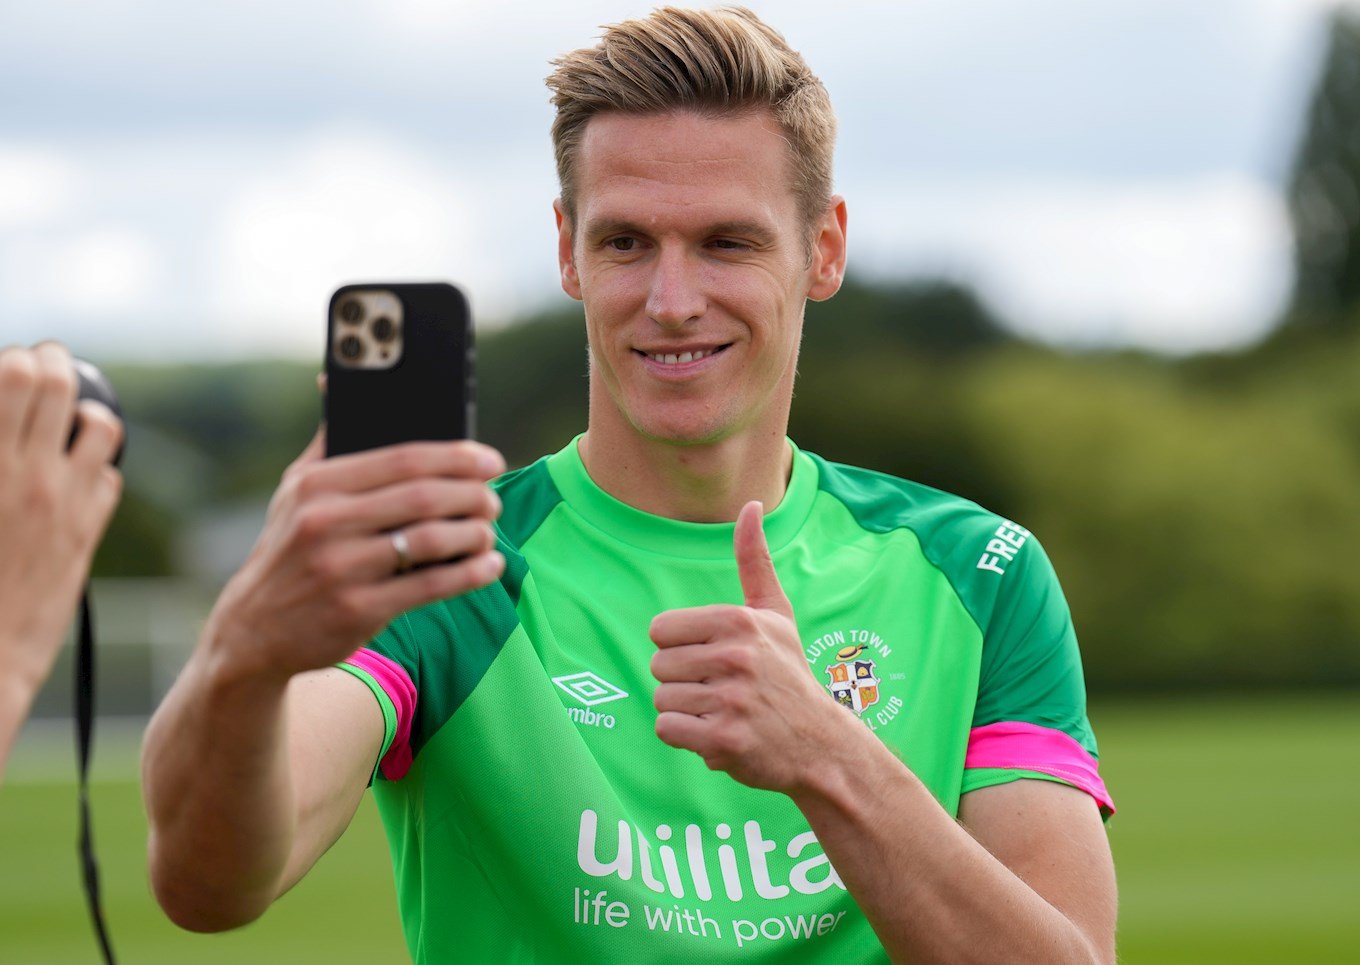 Thomas Kaminski recording a video message to Luton Town fans through a phone.